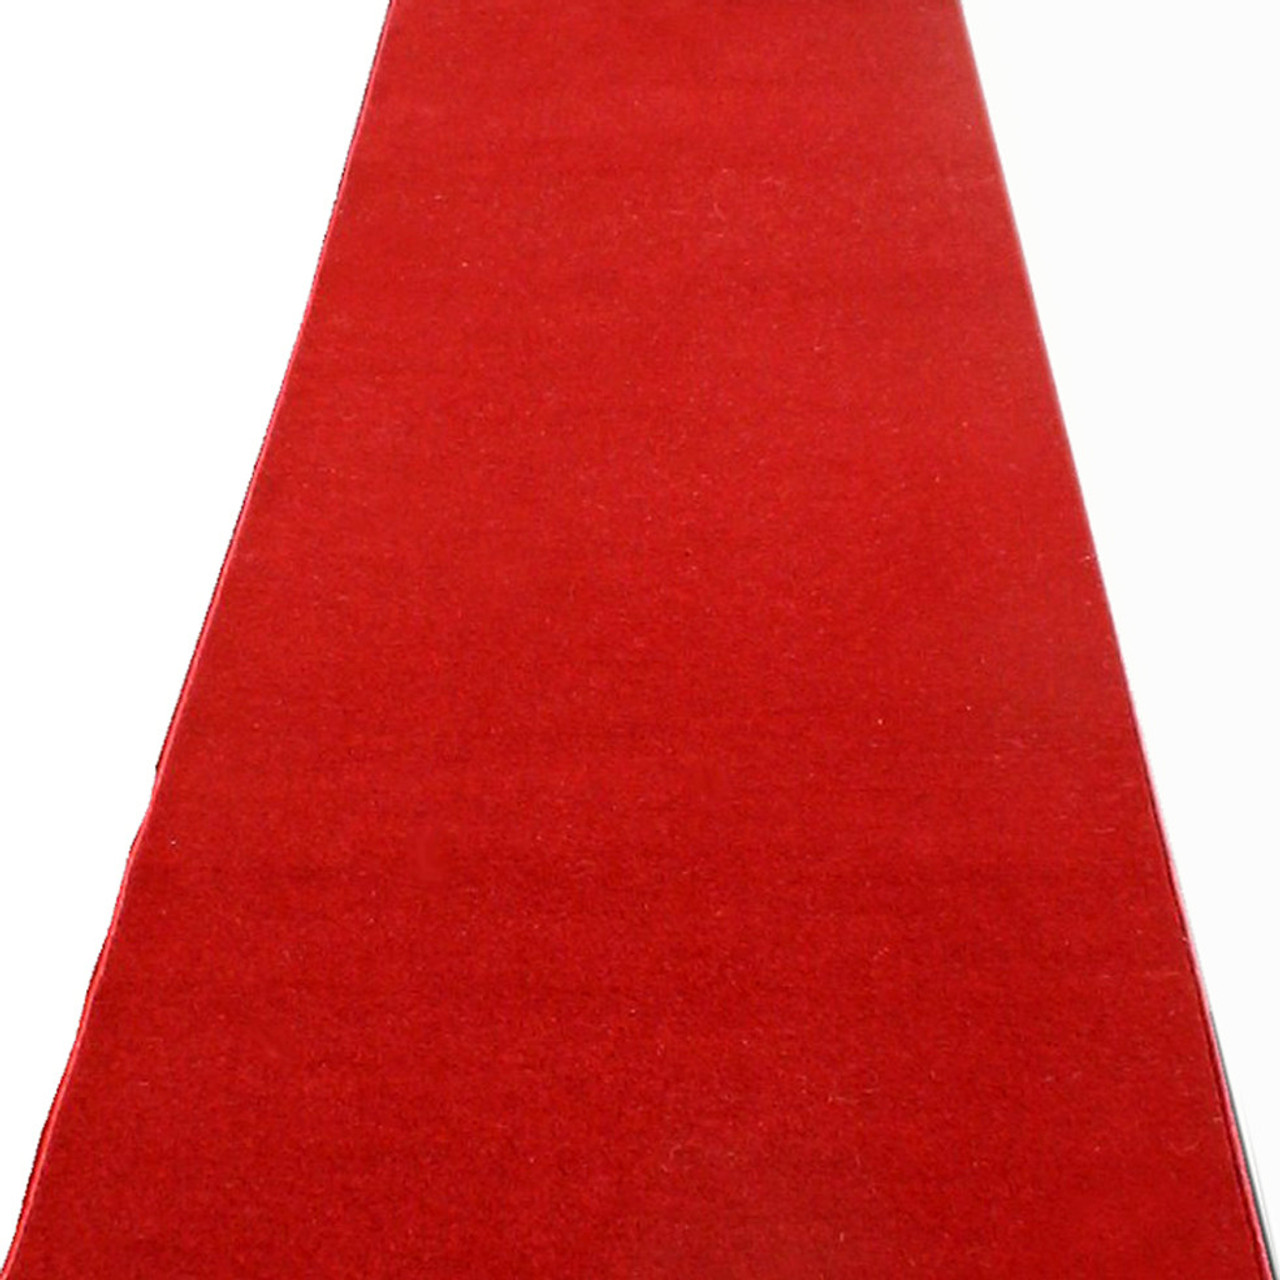 Red Carpet – 1.2m x 5m